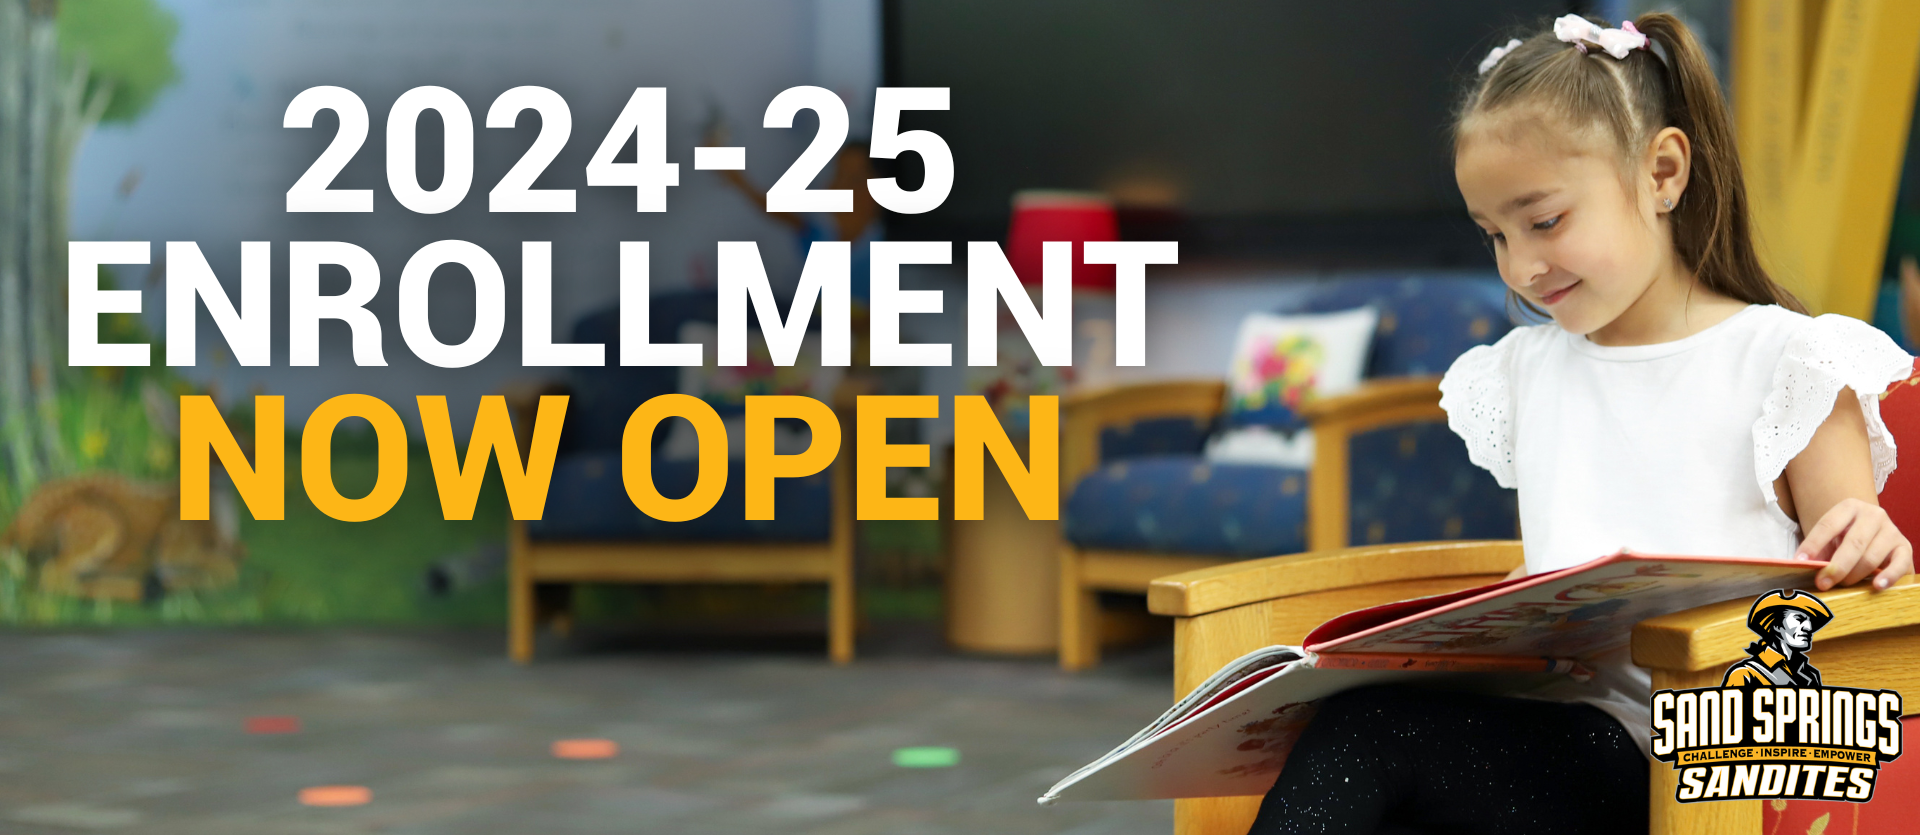 2024-25 Enrollment Now Open